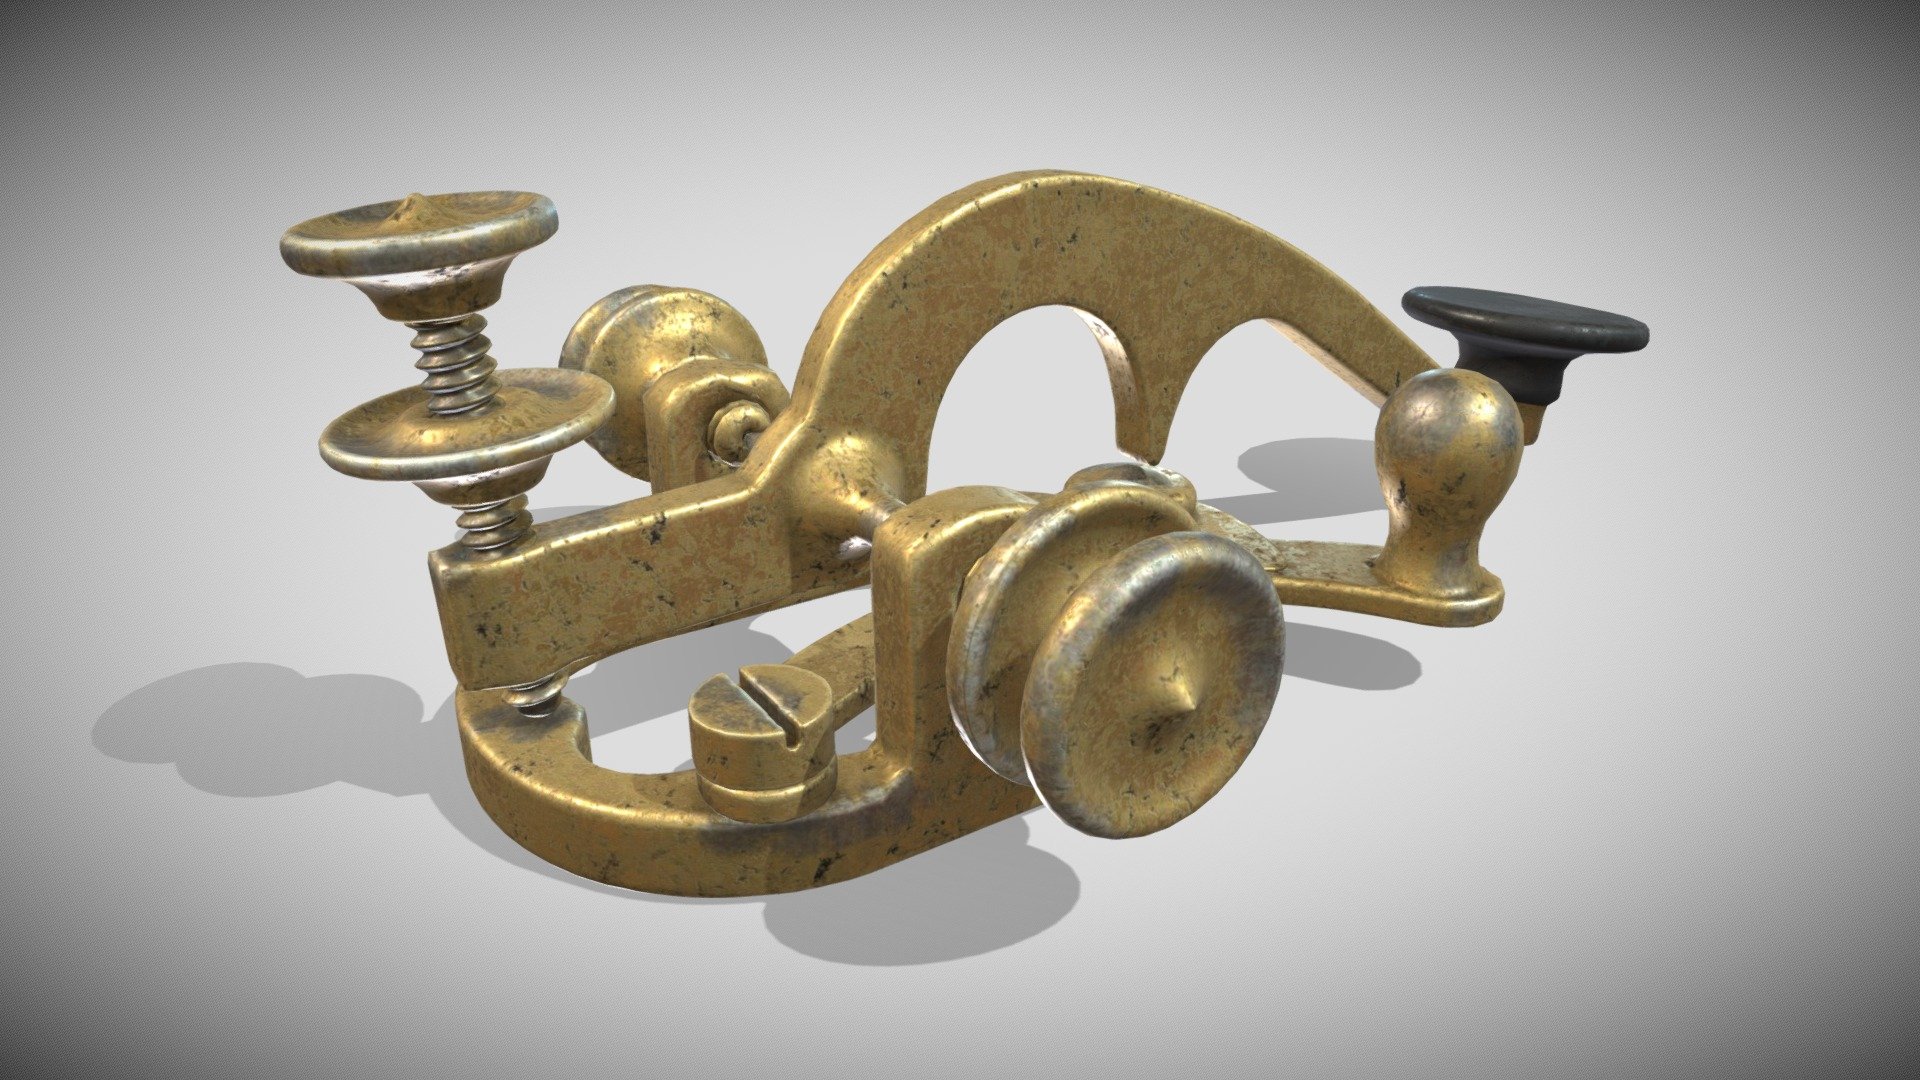 Old Telegraph Key Download Free 3d Model By Francesco Coldesina Topfrank2013 Bc18bf9